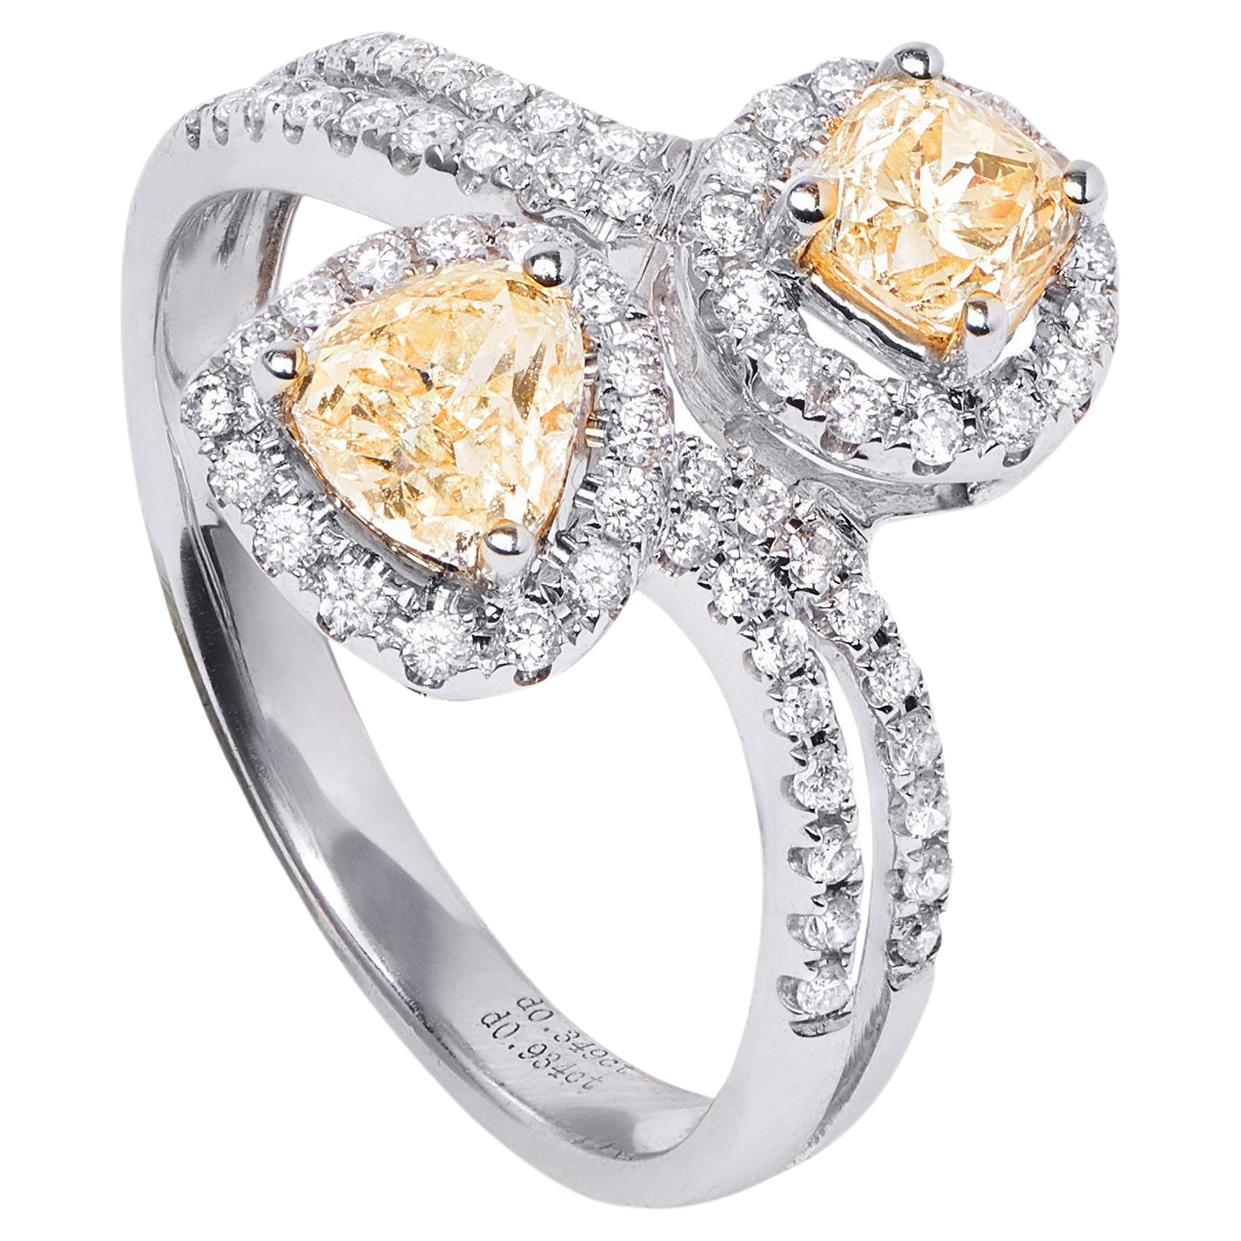 'Toi et Moi' Fancy Canary Yellow Diamond Ring